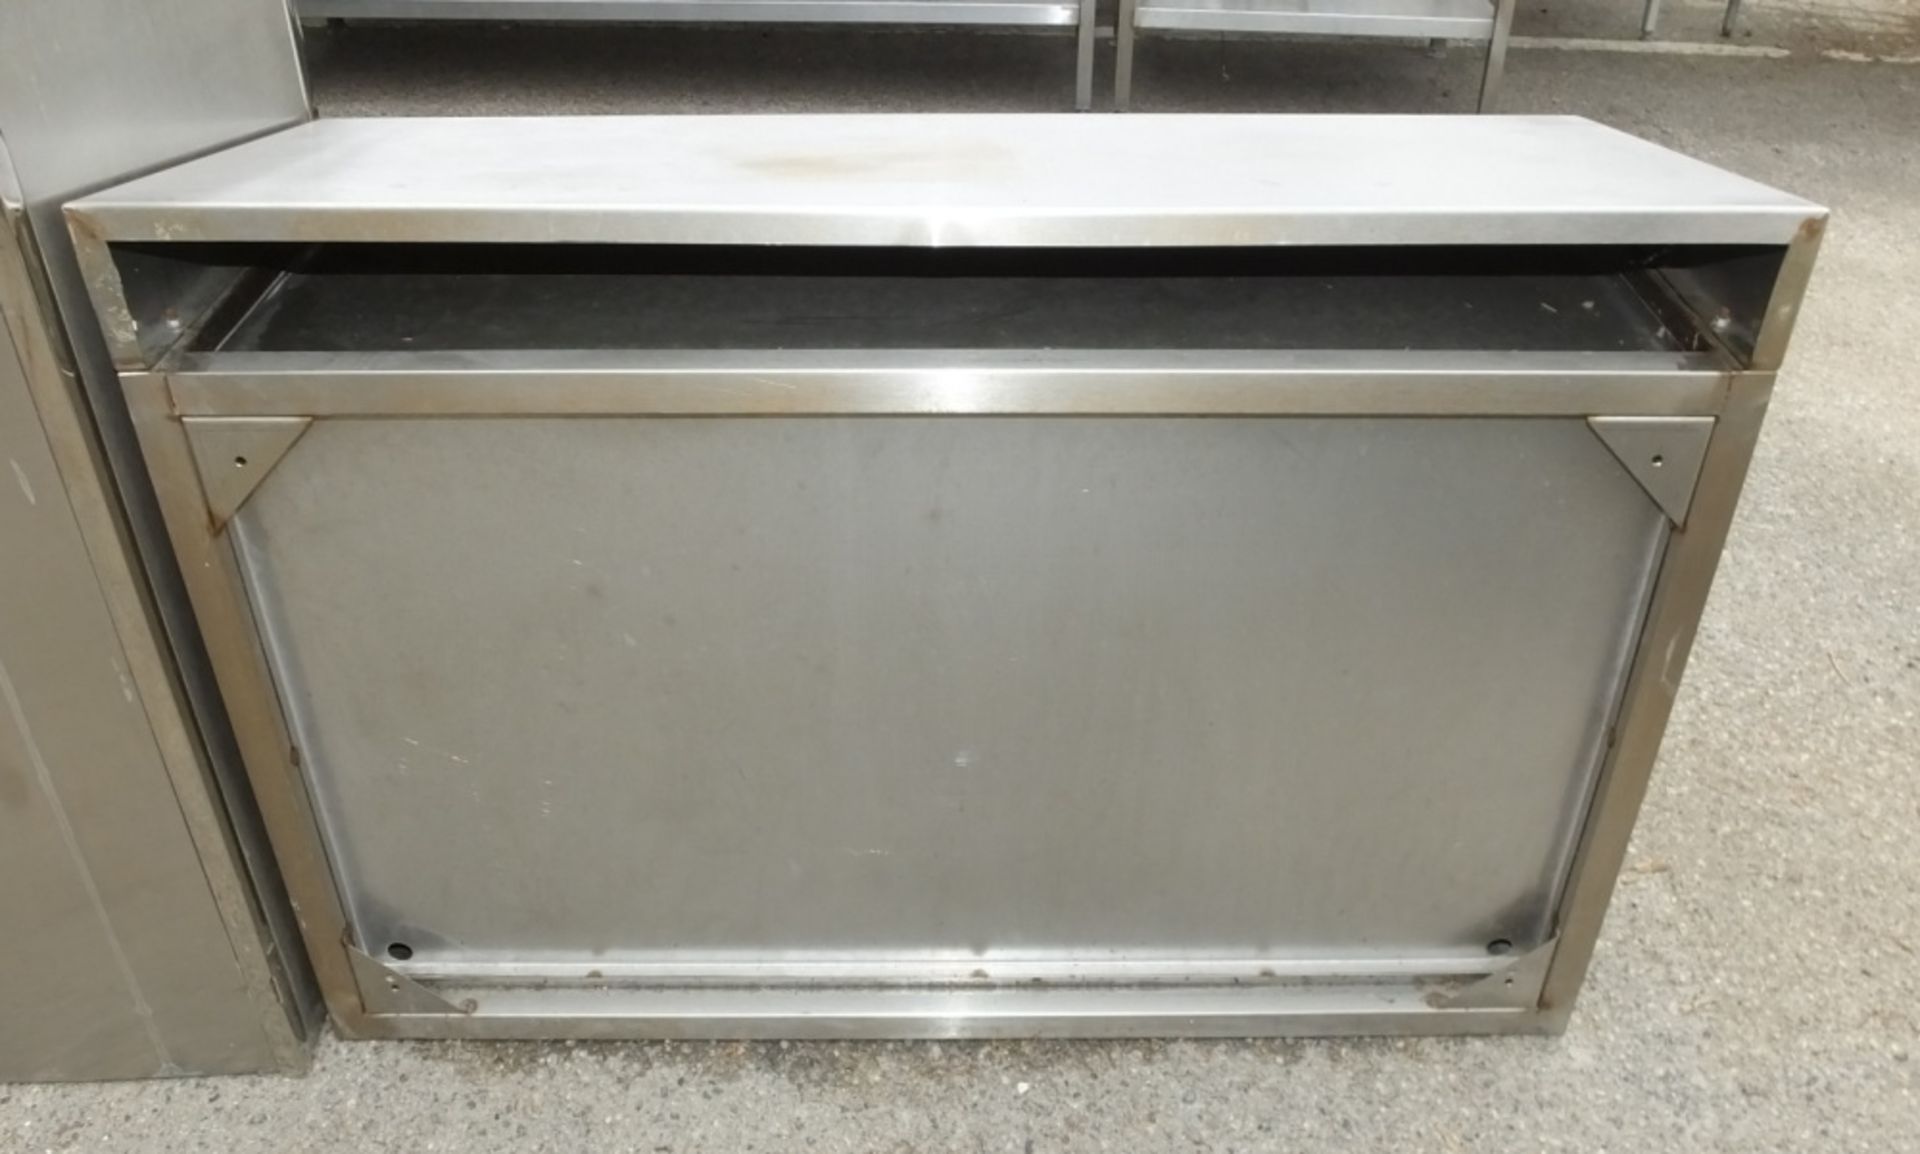 Stainless steel cabinet double door & shelf L 100 x W 40 x H 70cm - Image 3 of 3